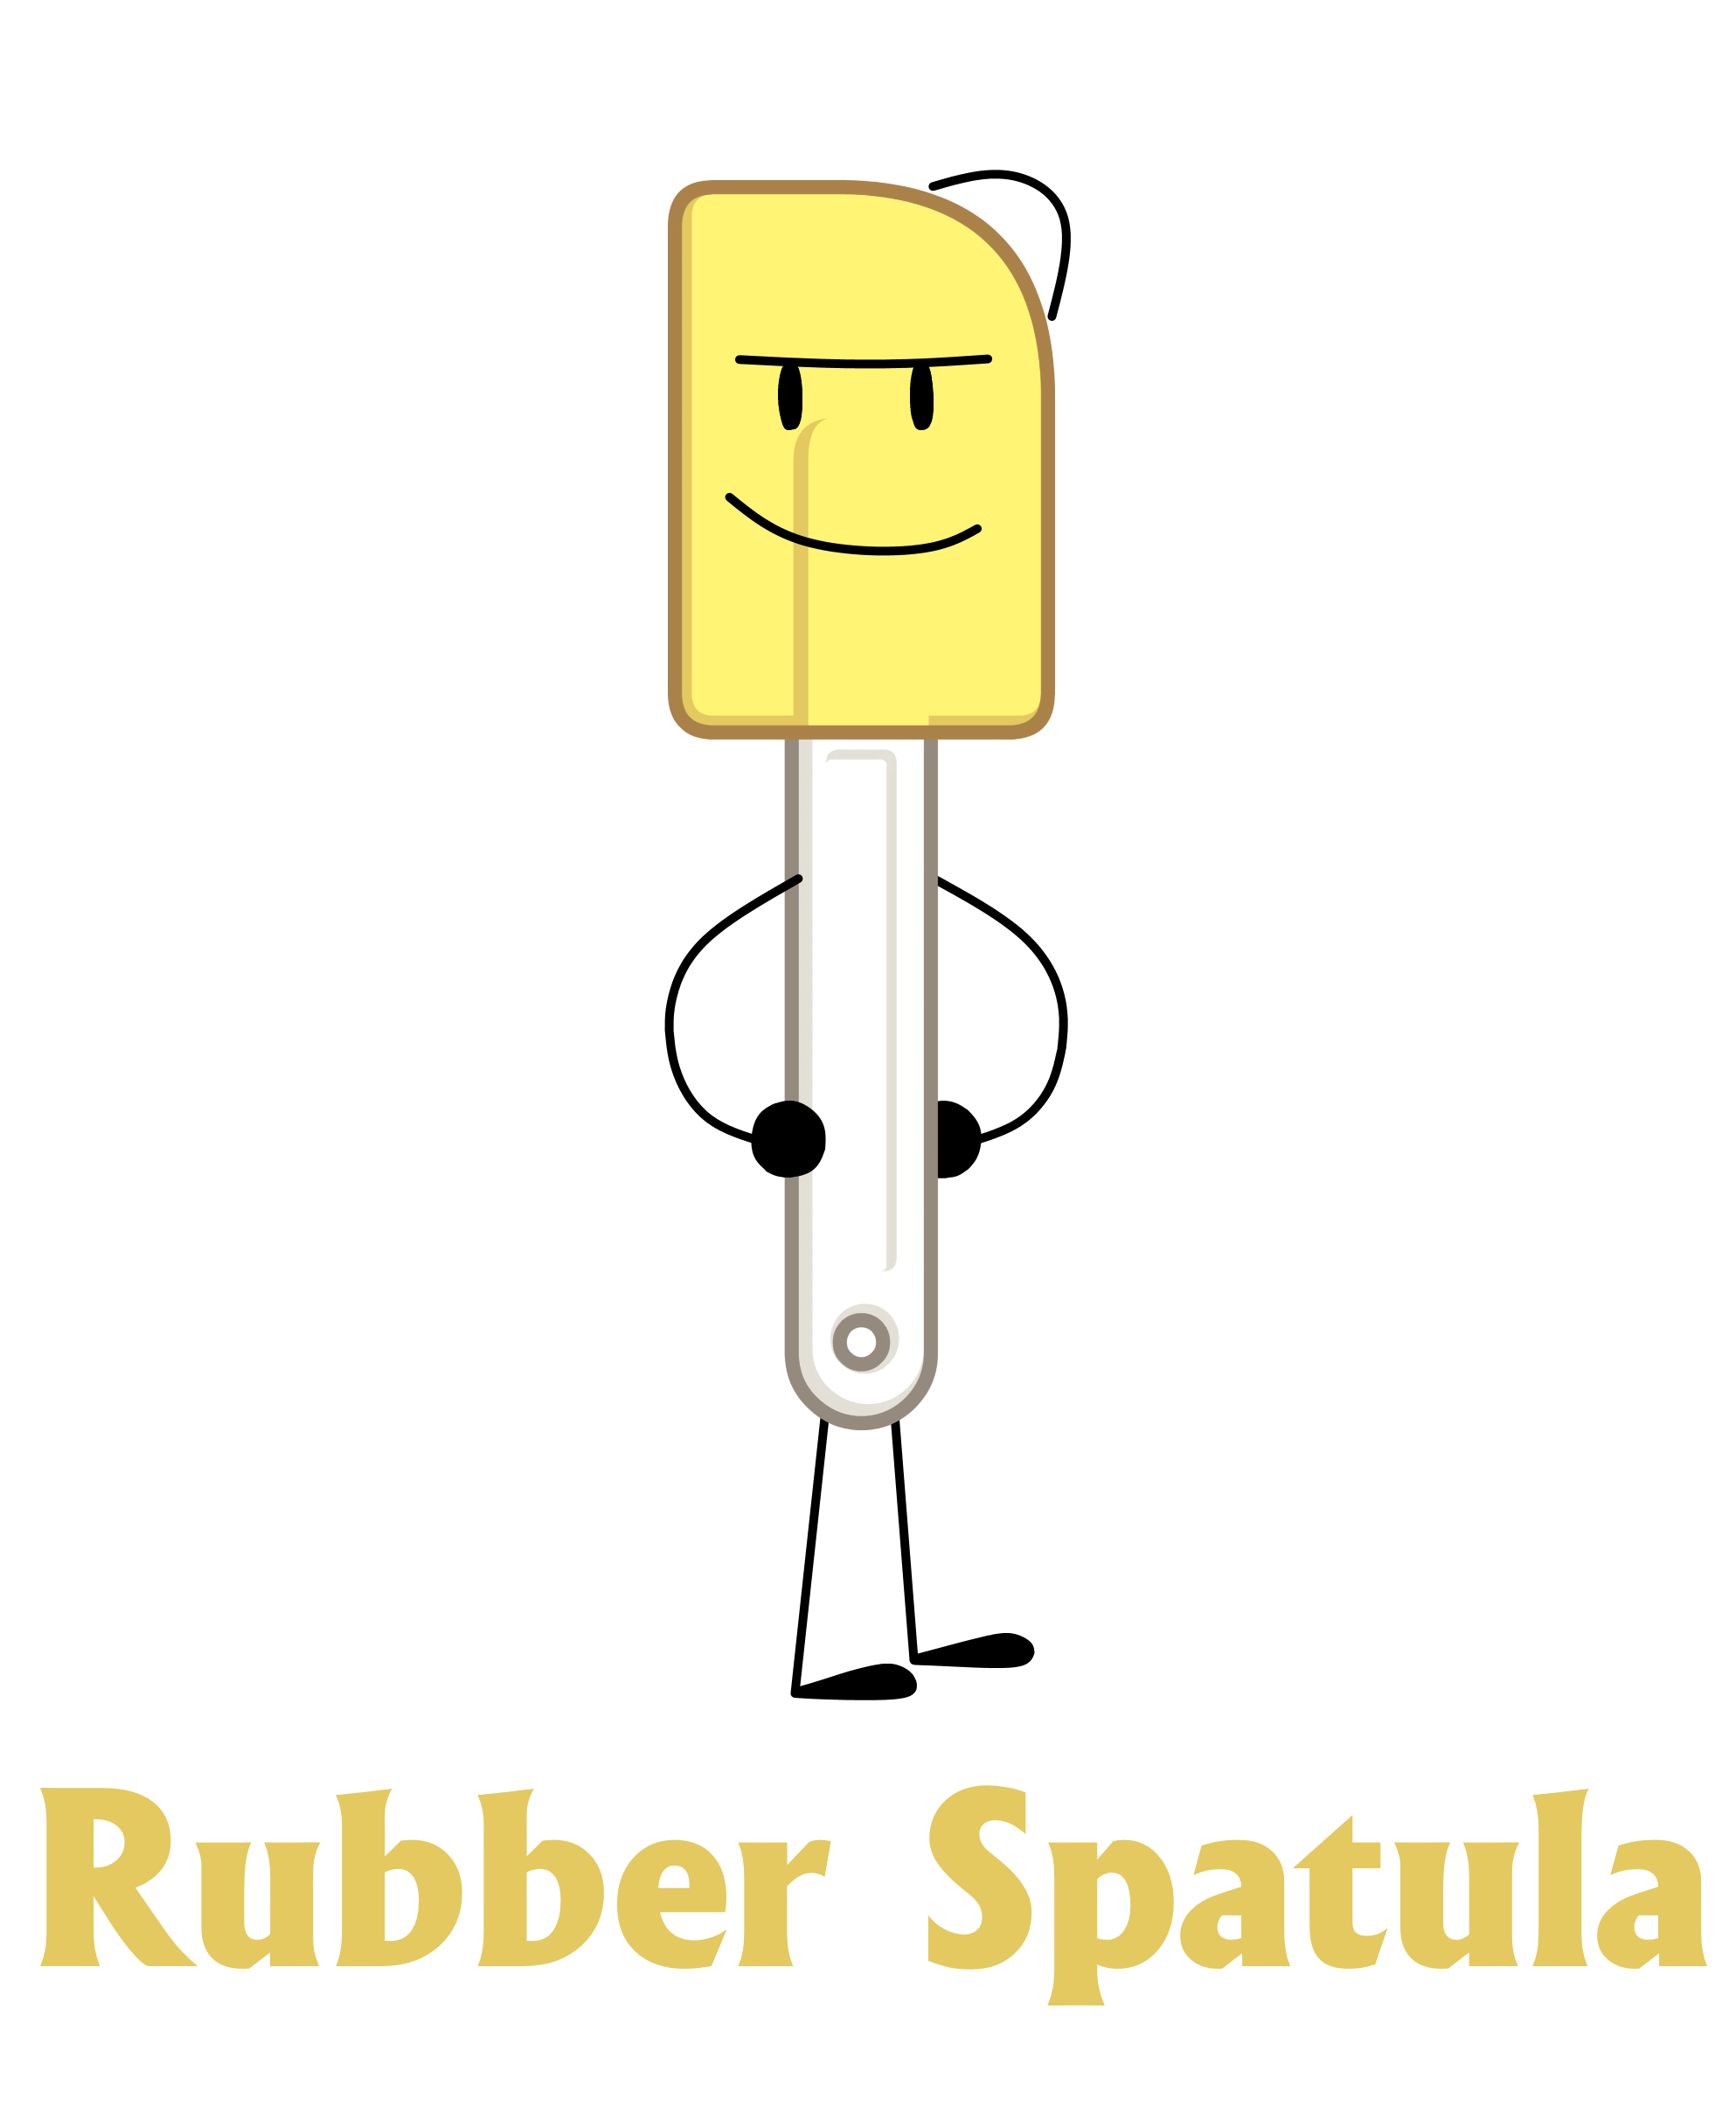 Rubber Spatula, Object Shows Community